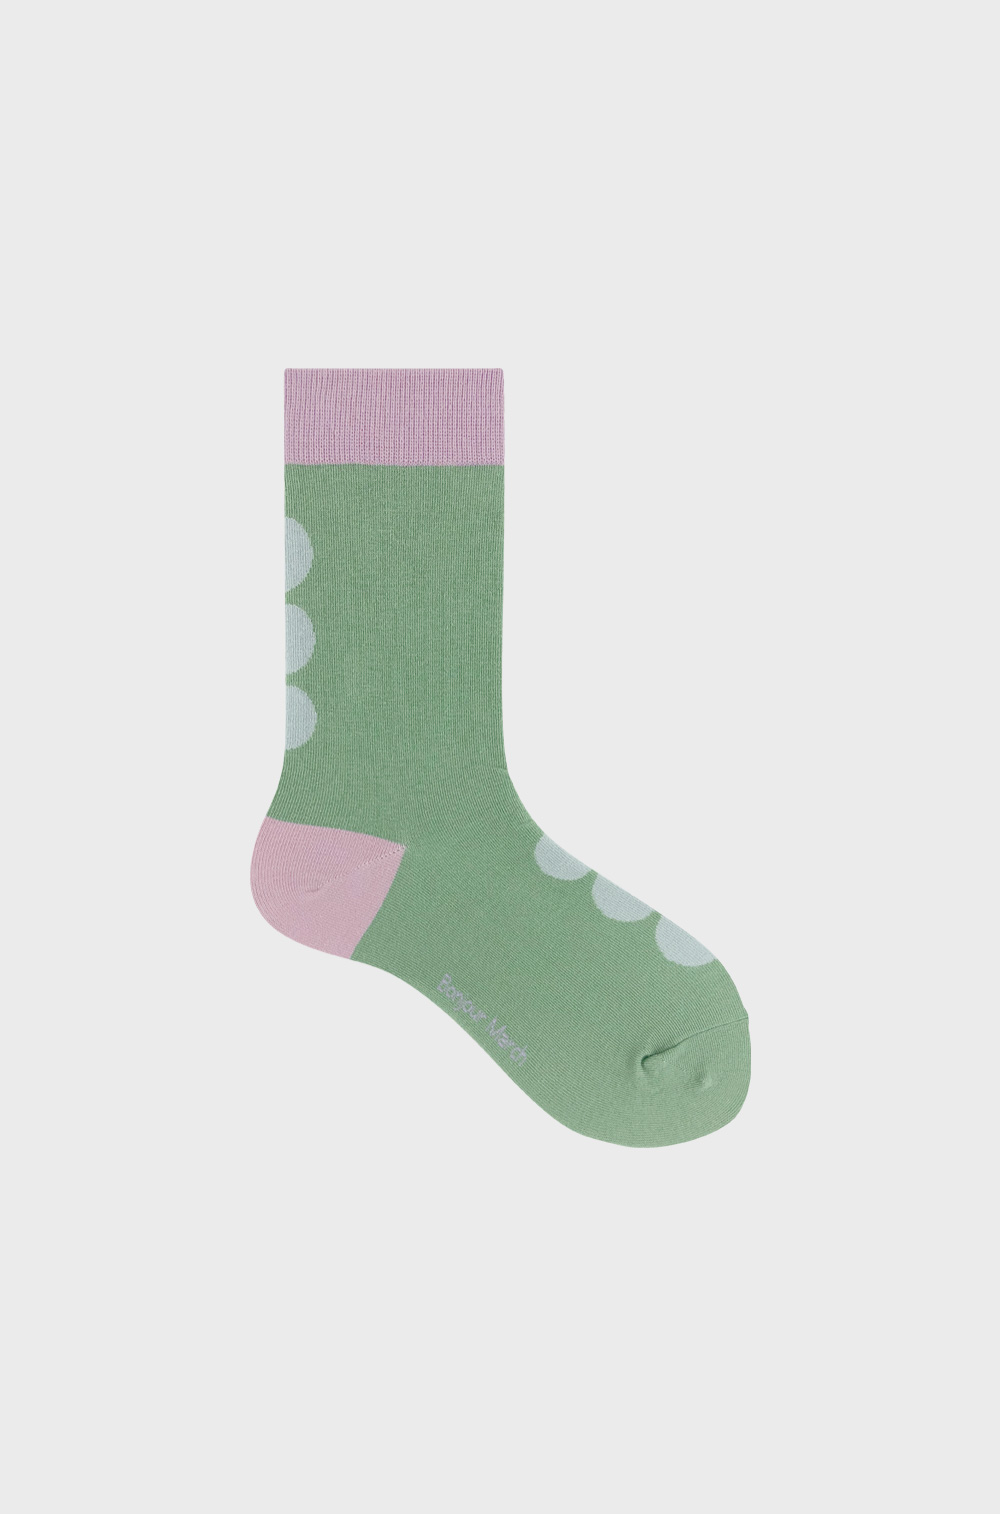 greenwood dot socks